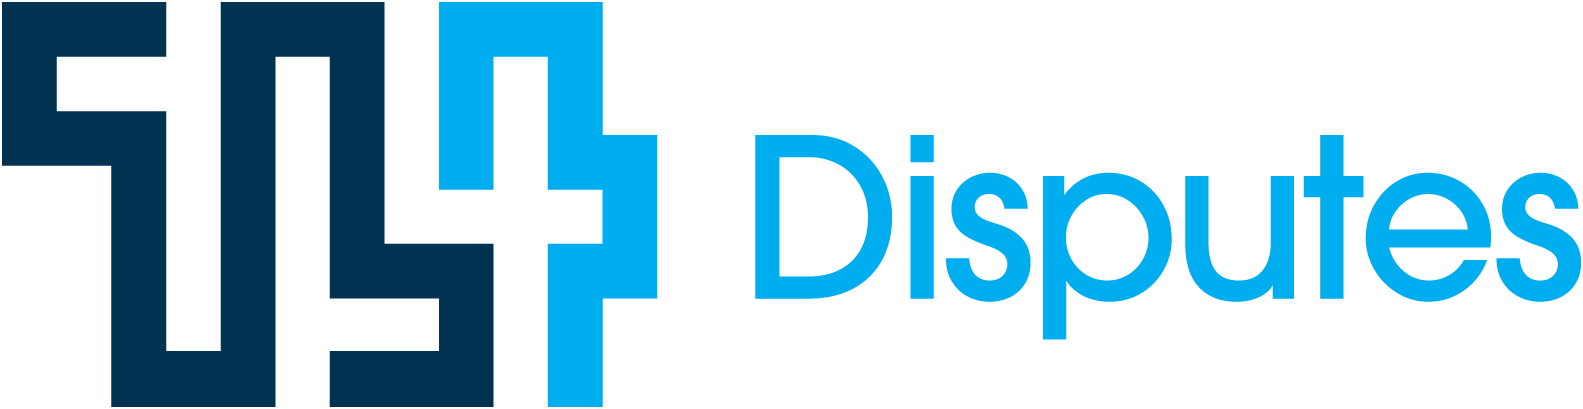 Disputes_Positive_Short-4